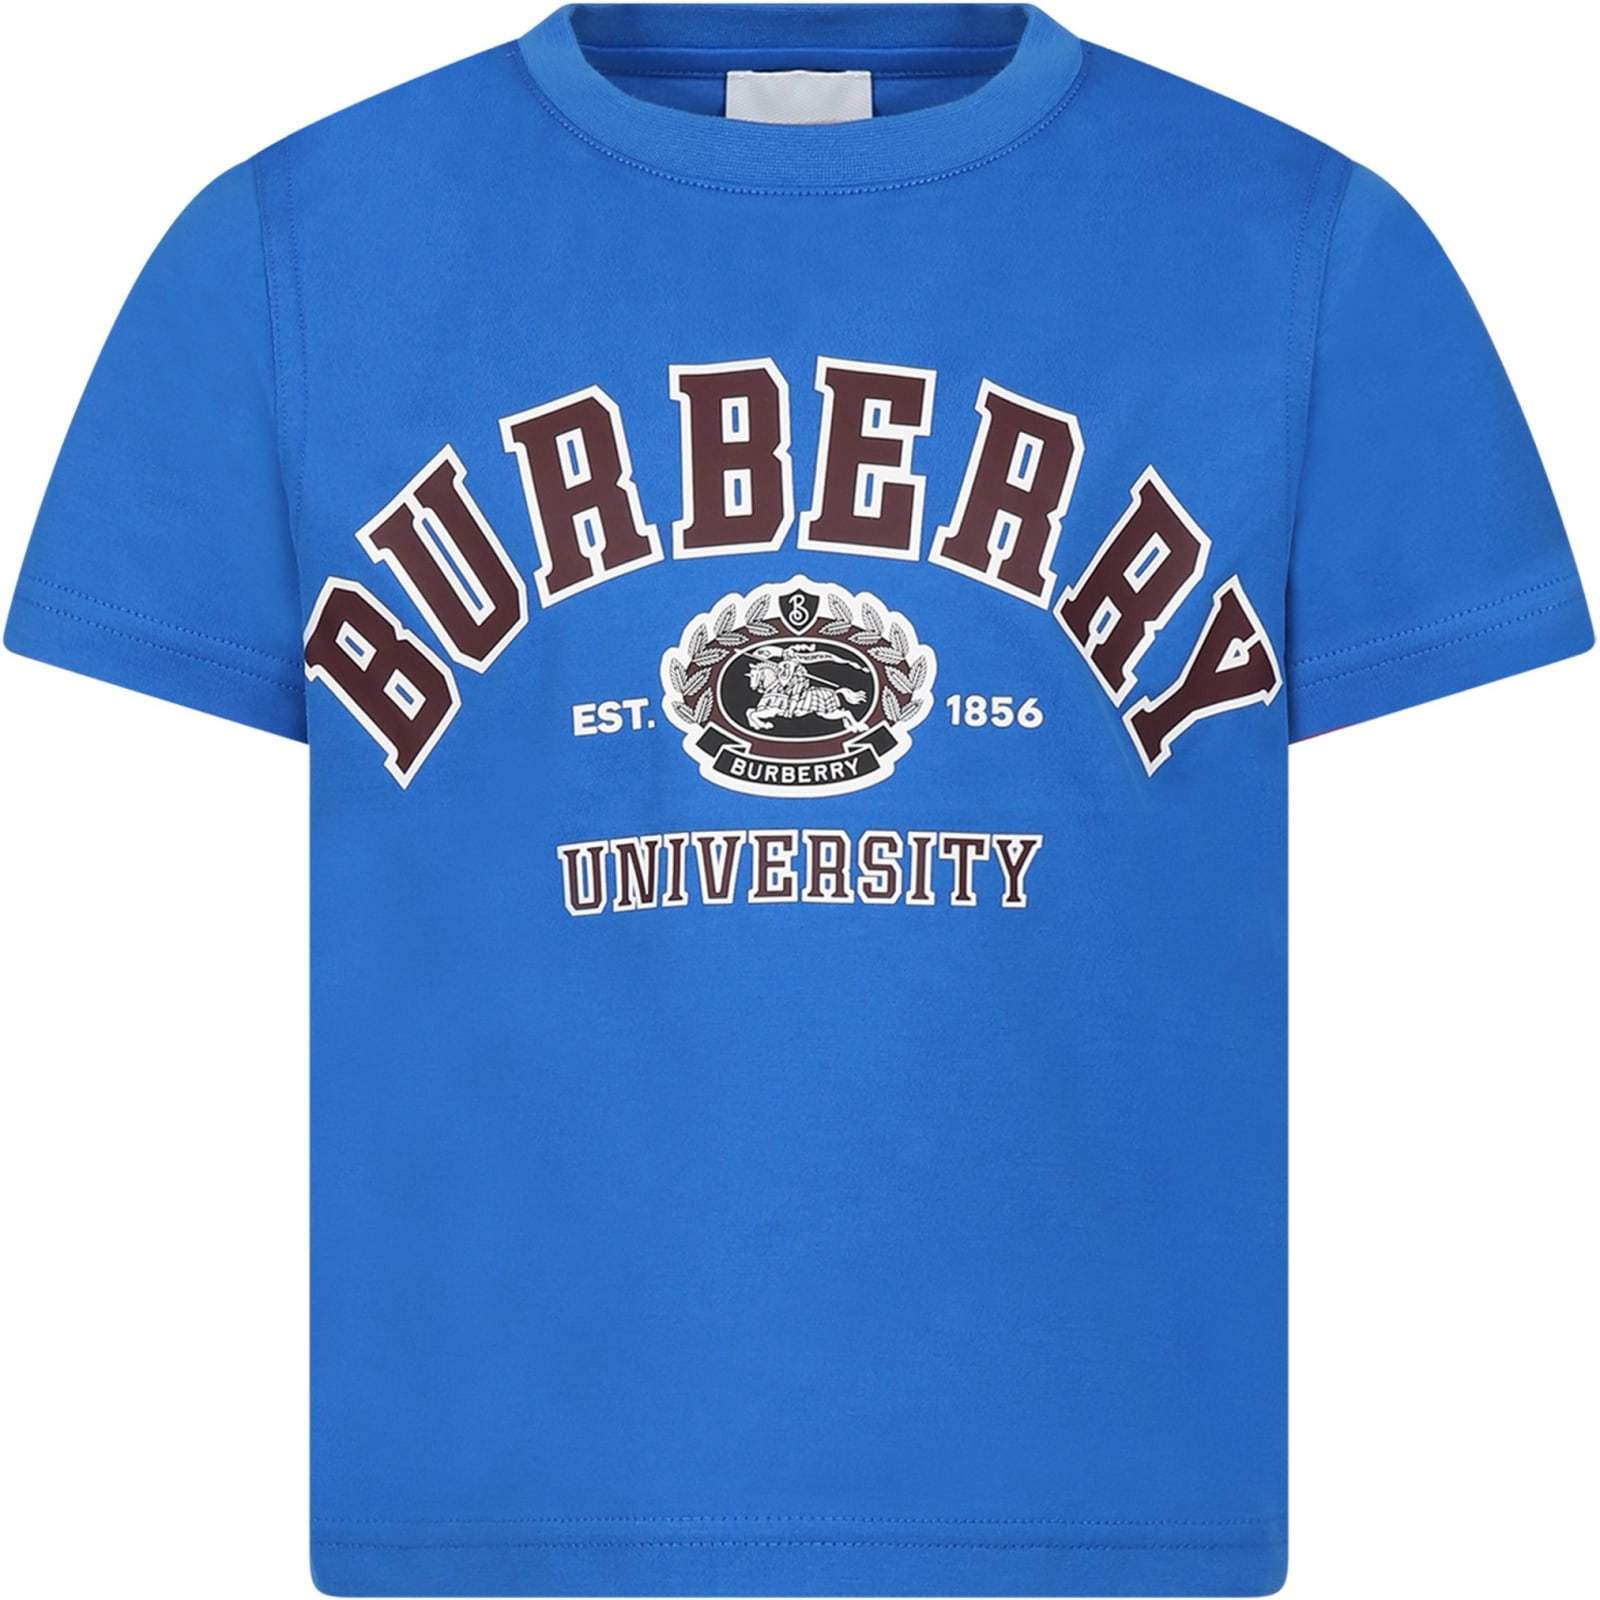 BURBERRY LIGHT BLUE T-SHIRT FOR BOY WITH LOGO